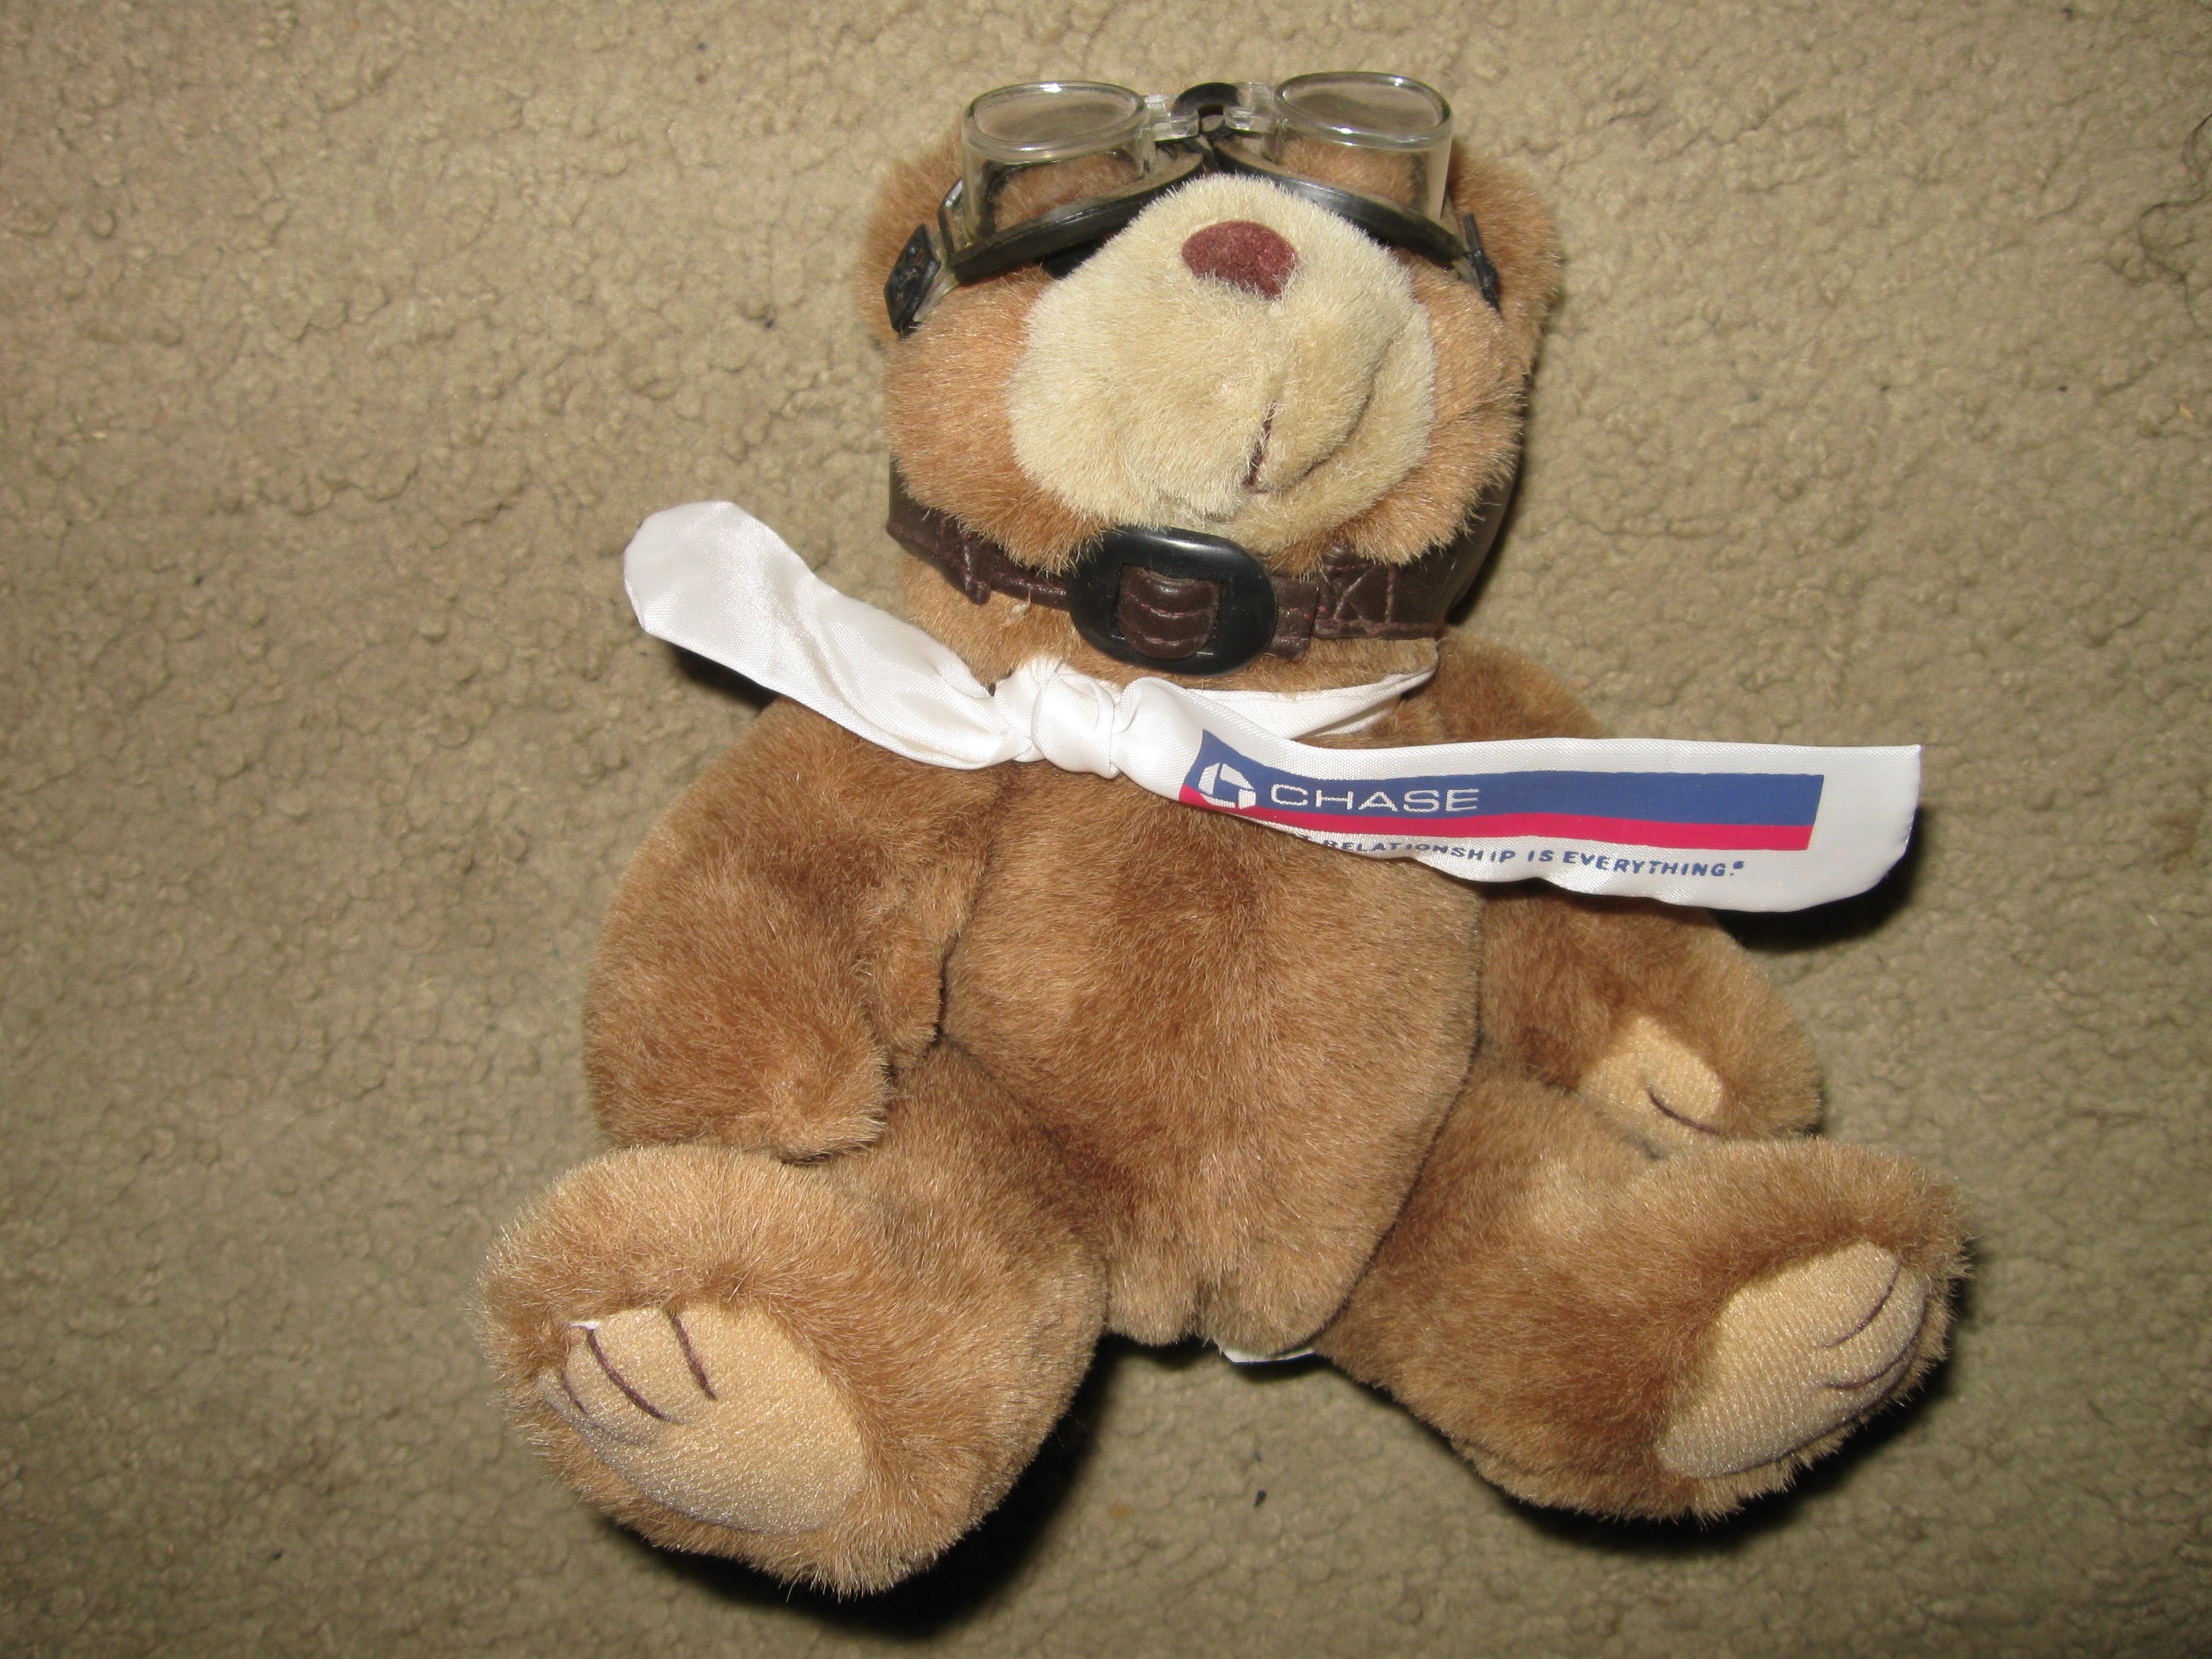 Chase bank flying teddy bear